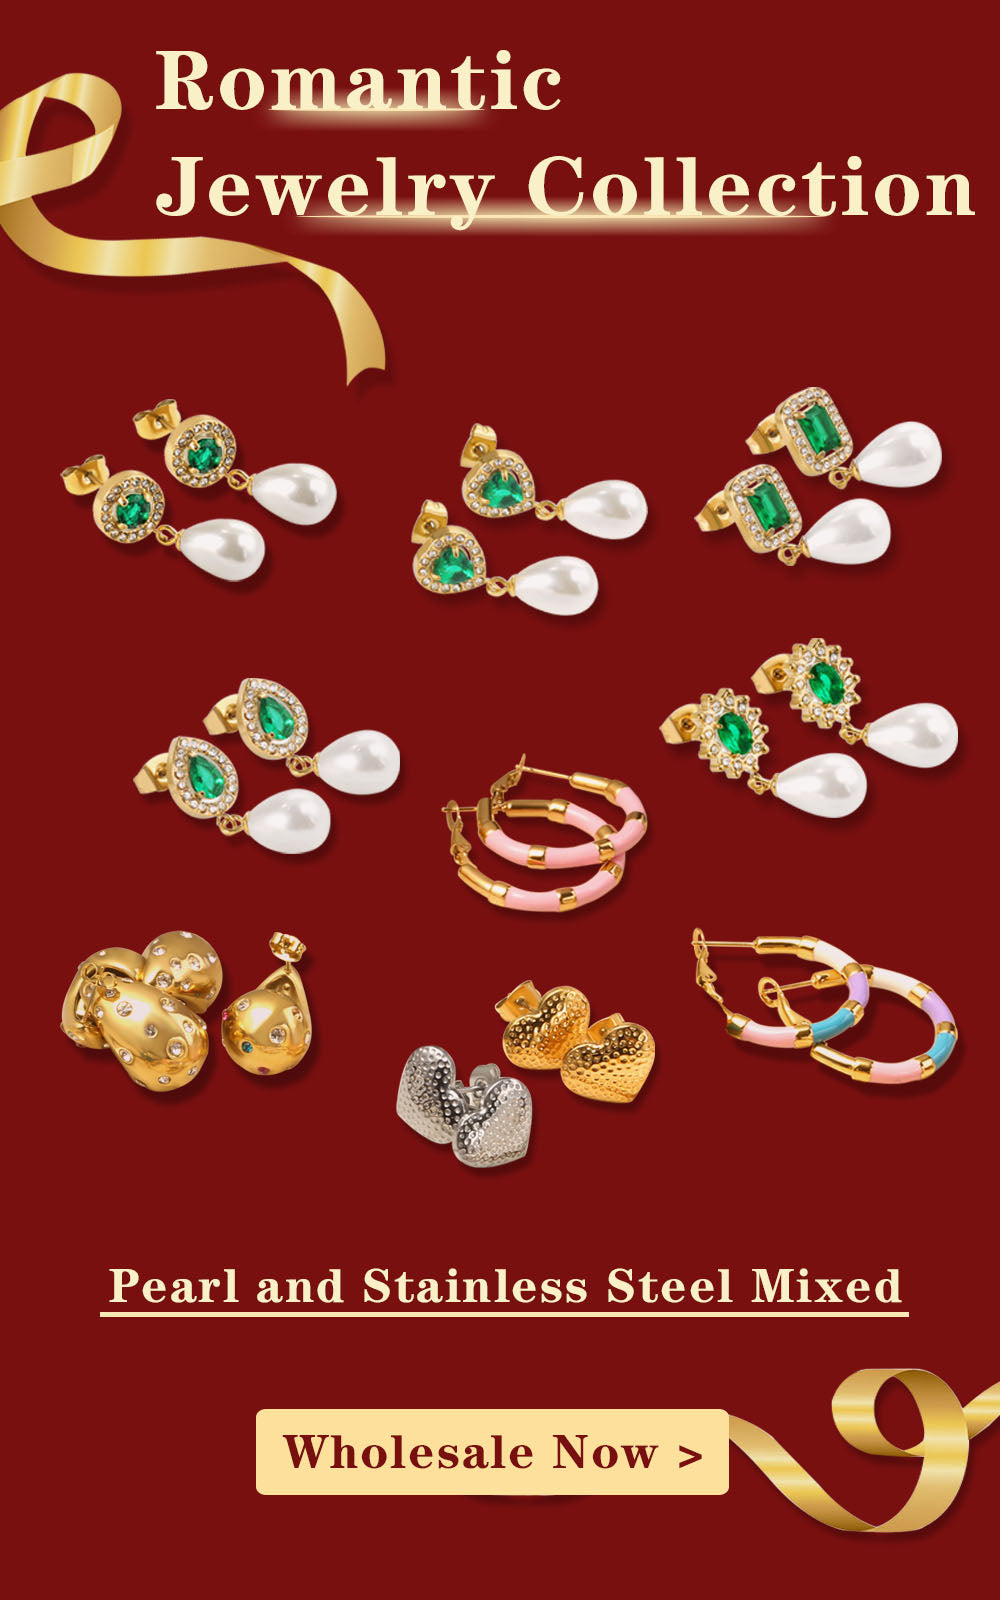 Asonjewelry